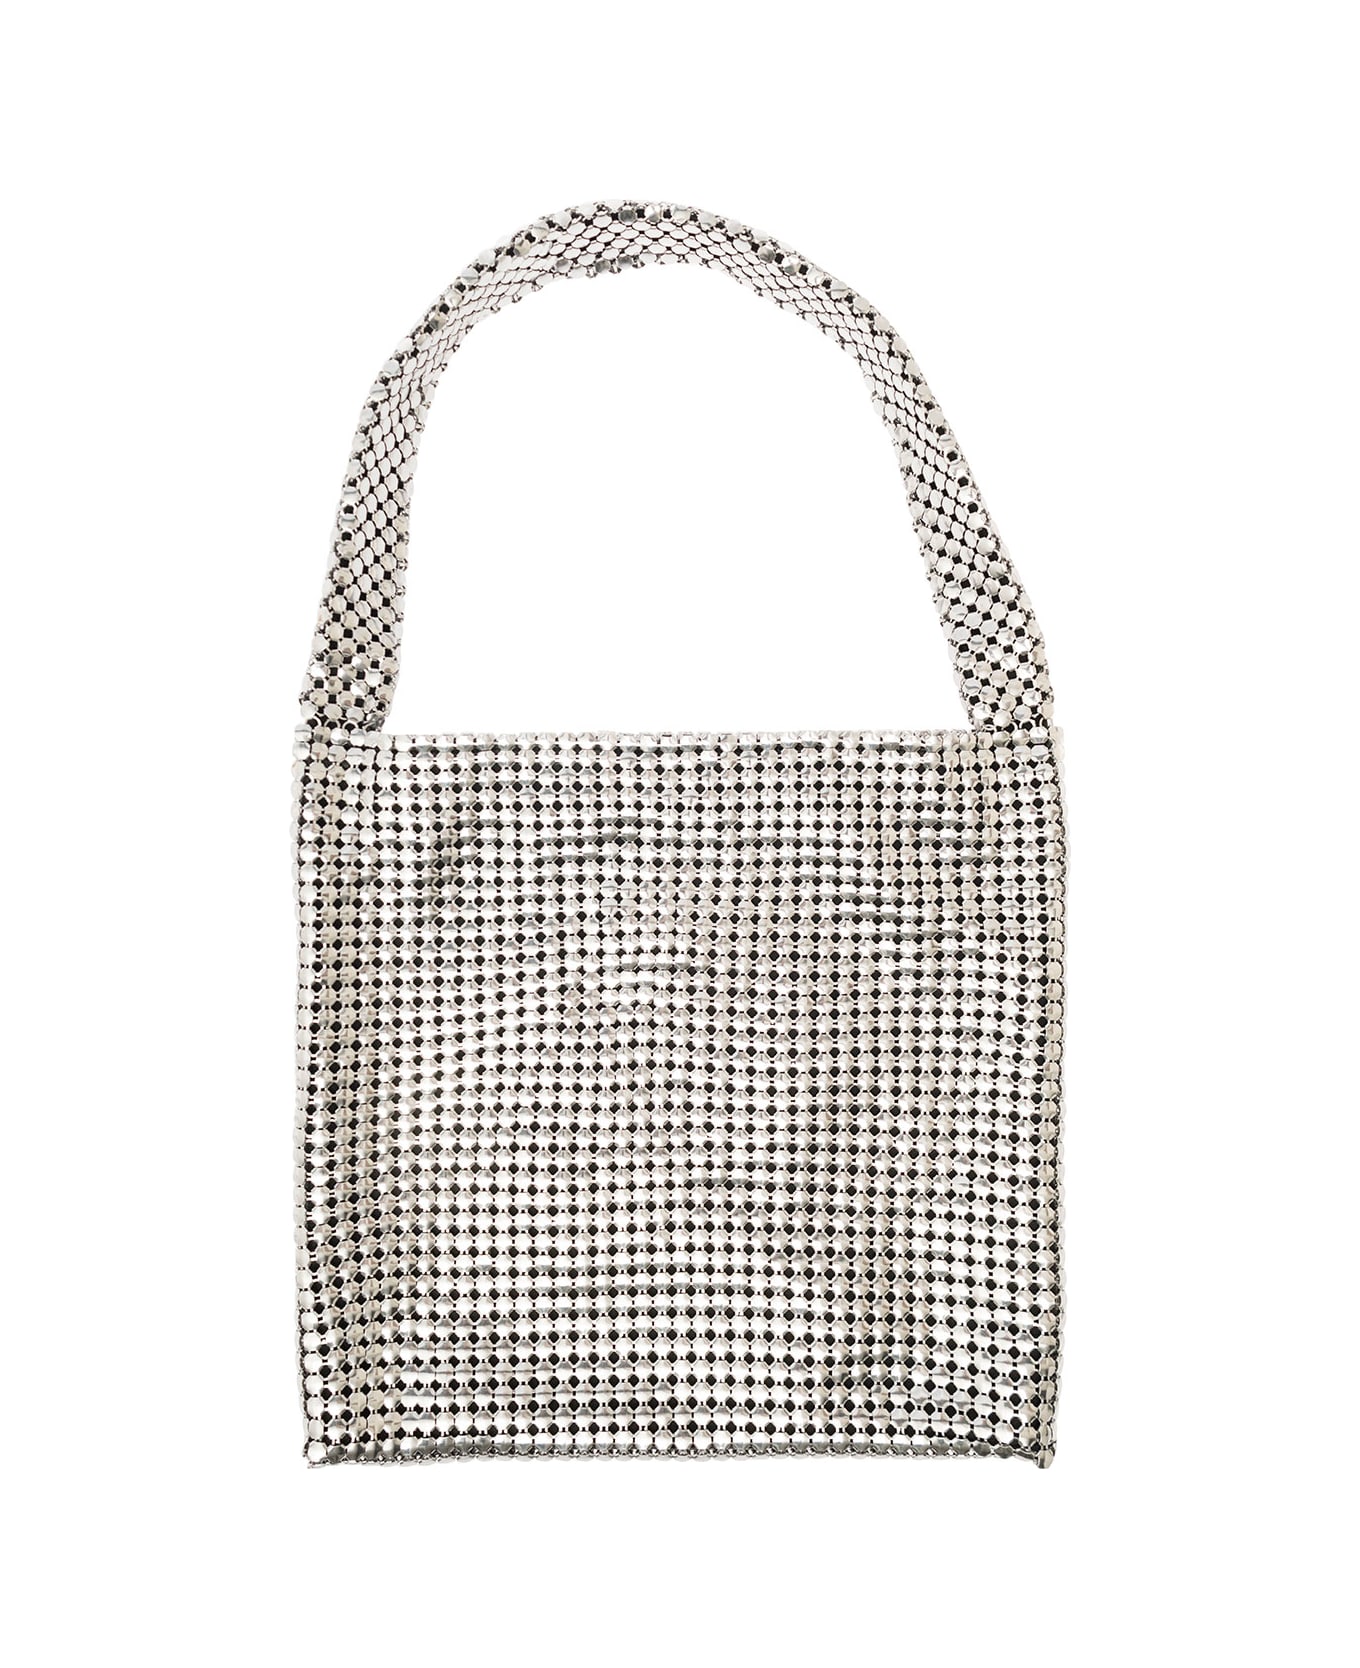 Paco Rabanne 'pixel' Silver-tone Tote Bag In Metallic Mesh Woman - Metallic